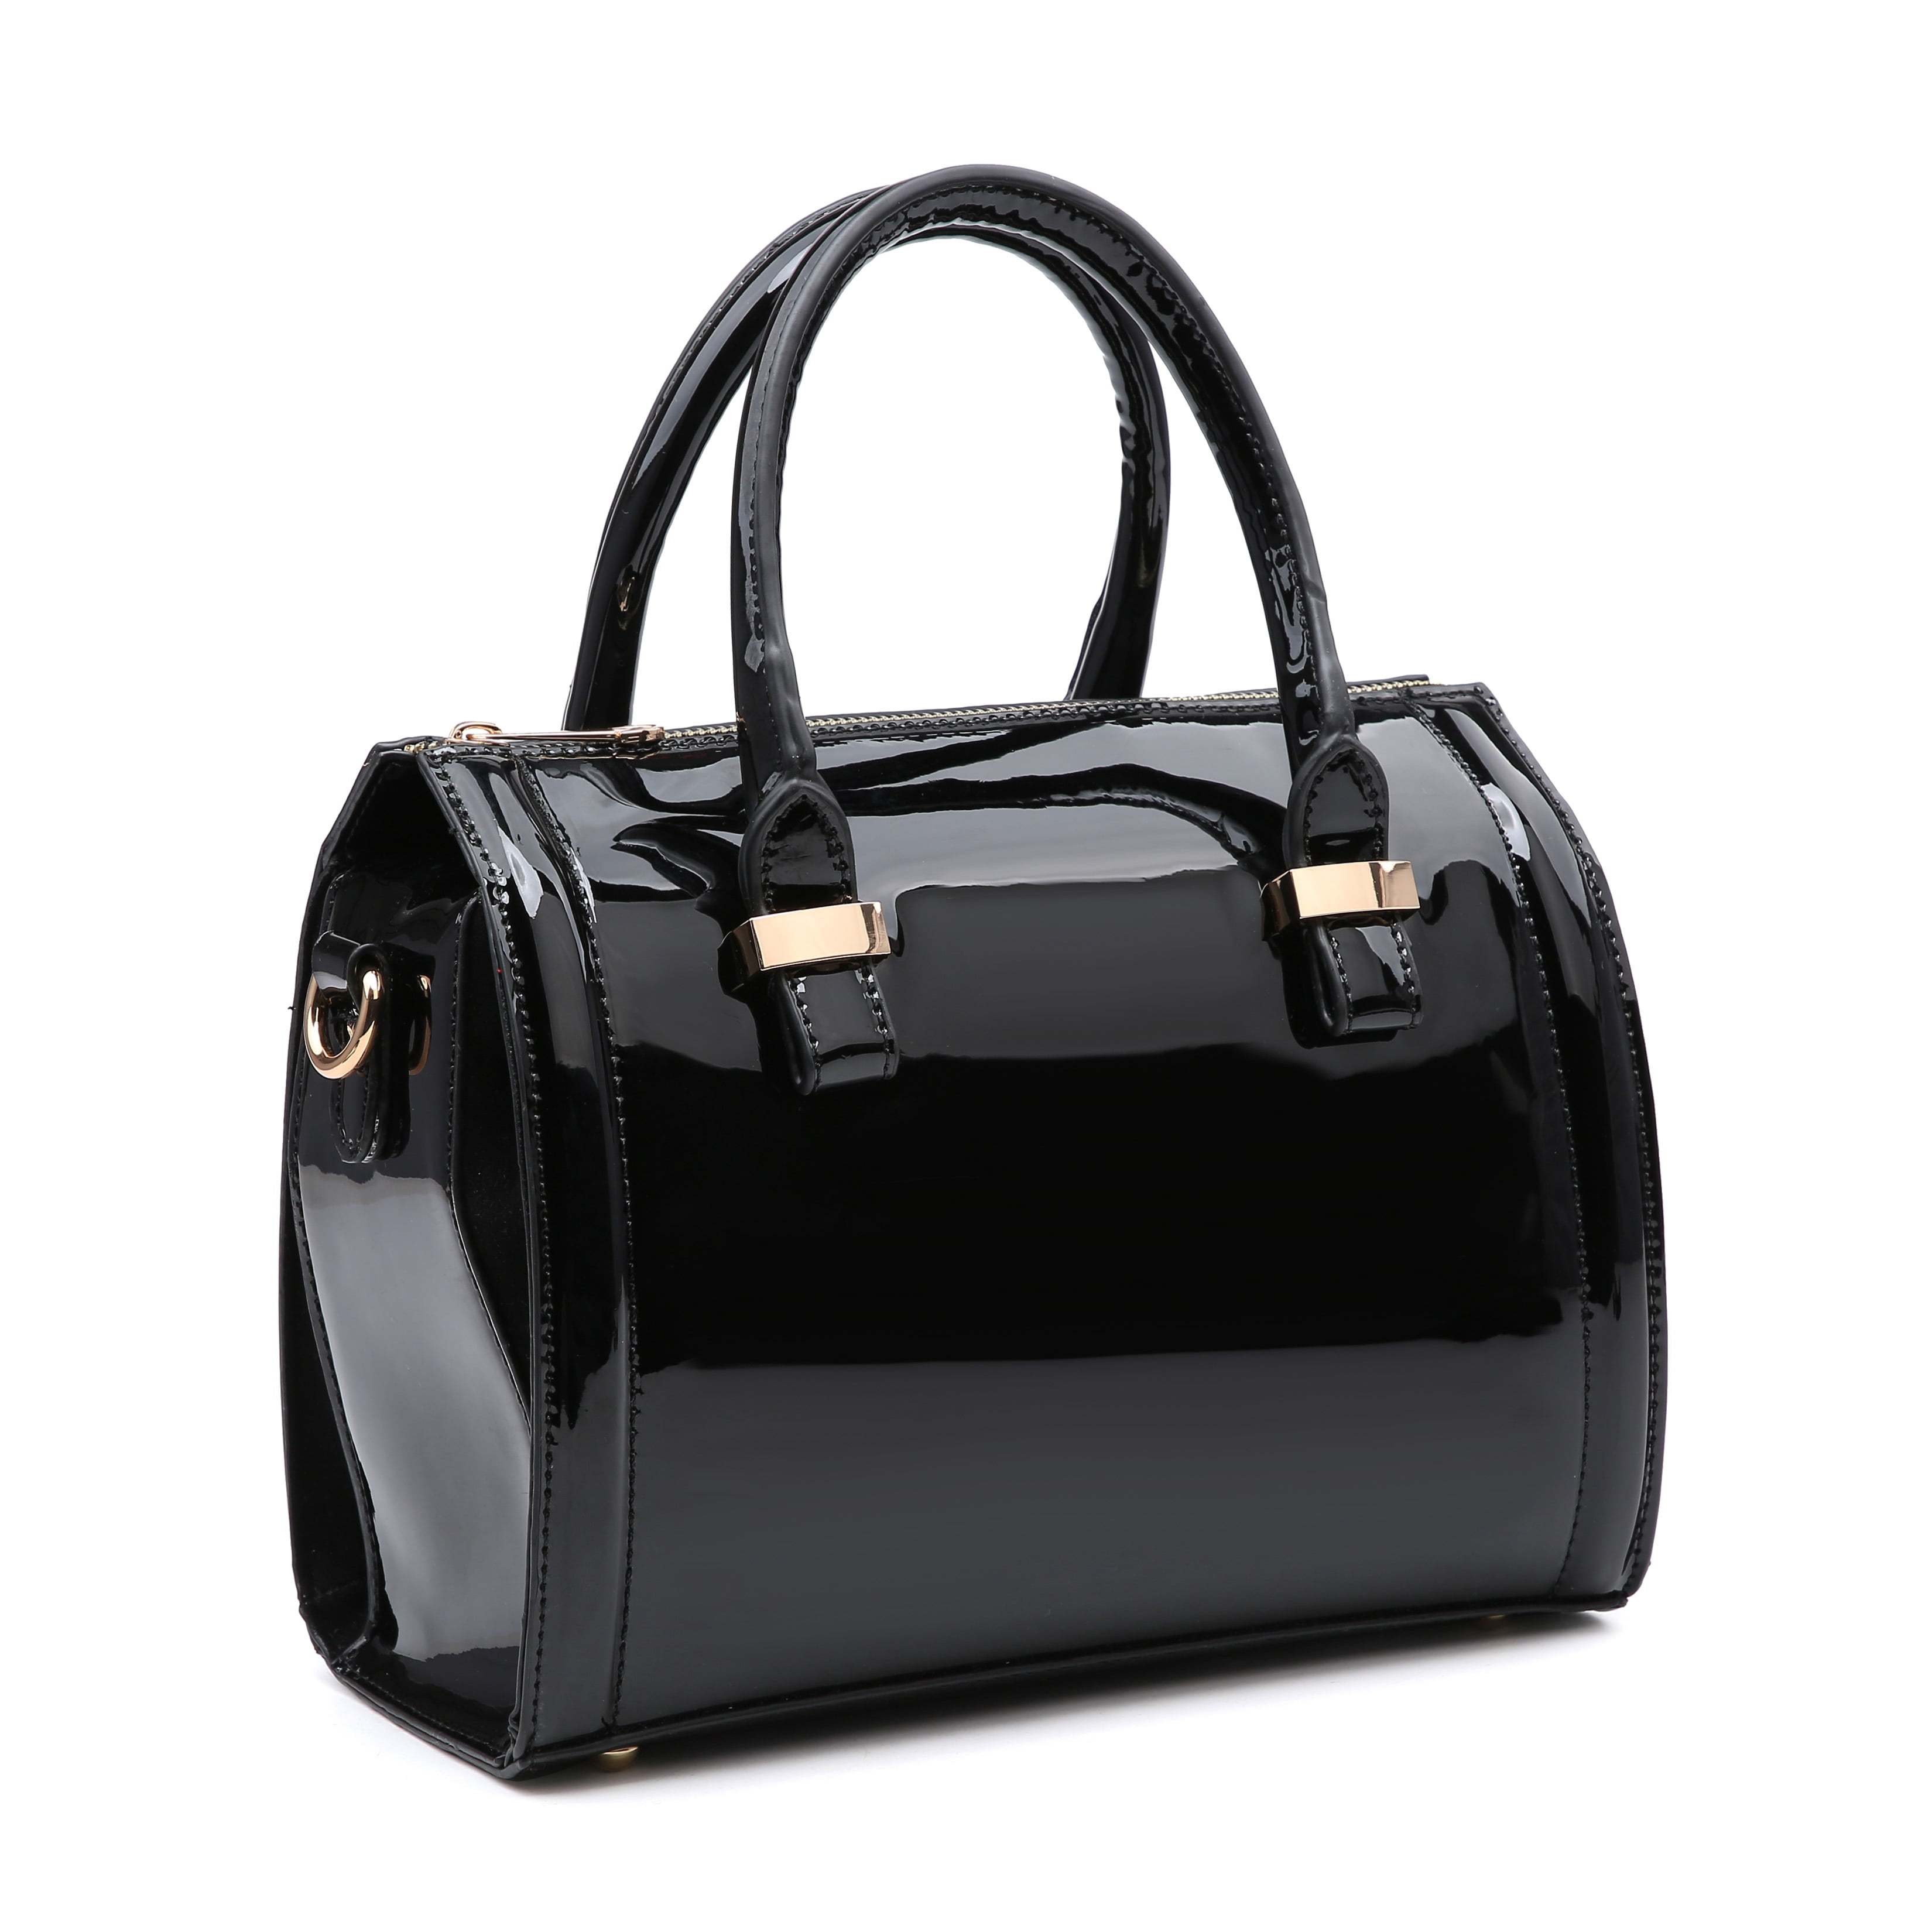 ZiMing Glossy Patent Leather Handbags for Women Top Handle Purse Satchel Bag Stylish Handbag Medium Tote Bags Shoulder Bag